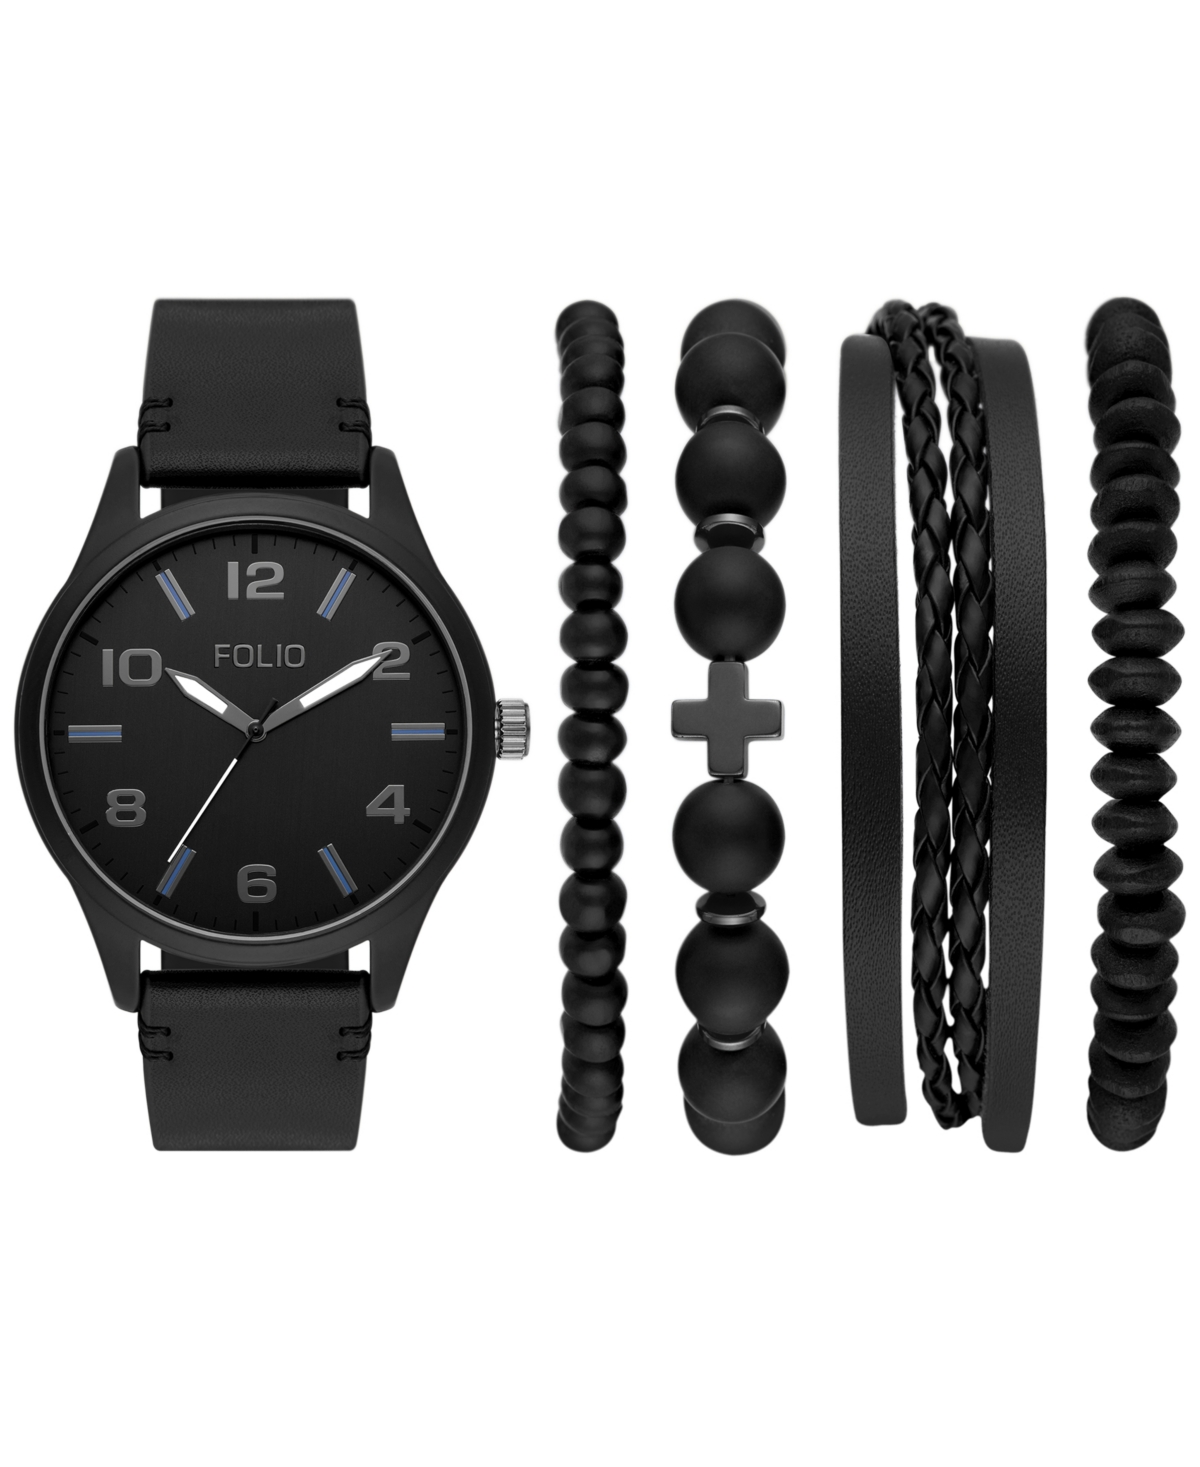 Men's Three Hand Gunmetal 46mm Watch and Bracelets Gift Set, 5 Pieces - Gunmetal